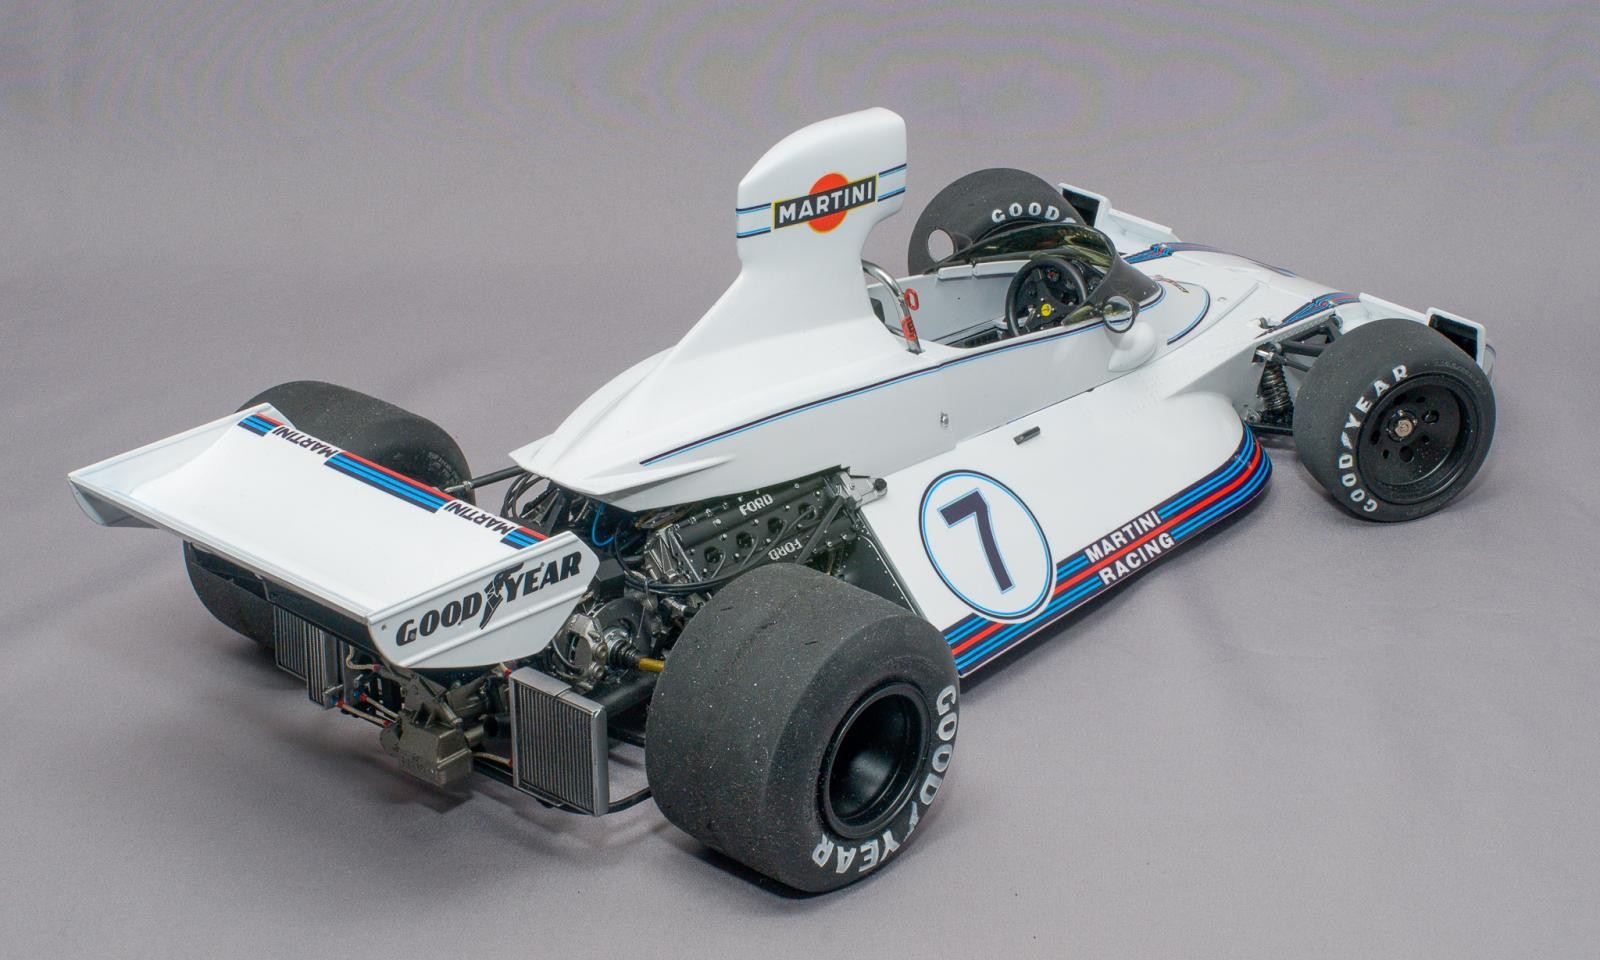 1 jpy ~ Tamiya big scale 1/12 Brabham BT44B F-1: Real Yahoo auction salling